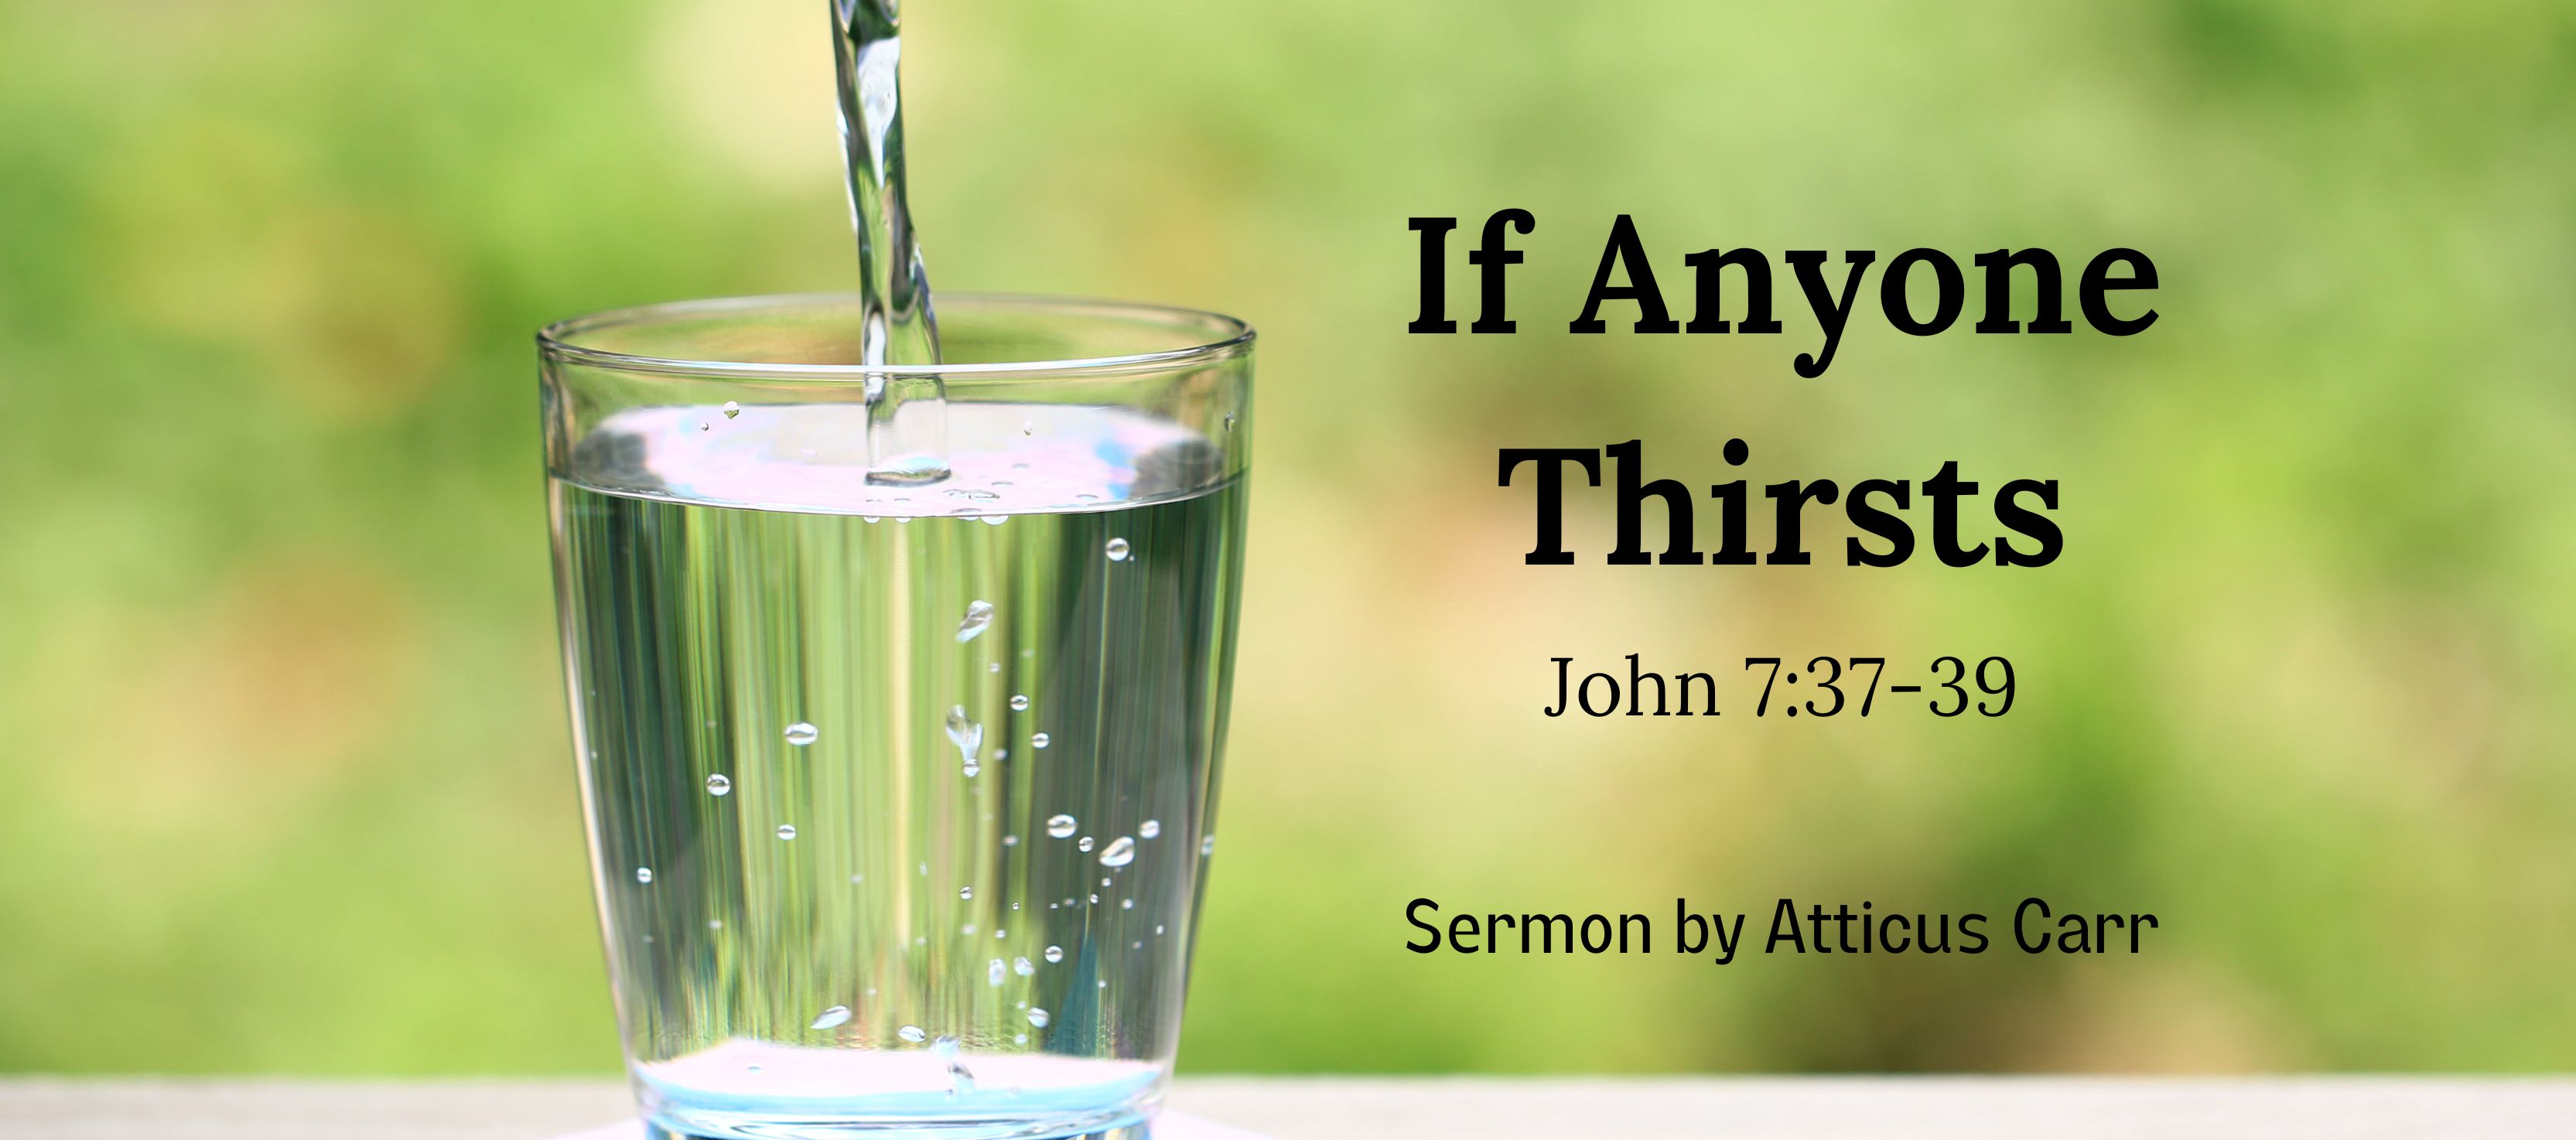 Thirsting for Jesus banner